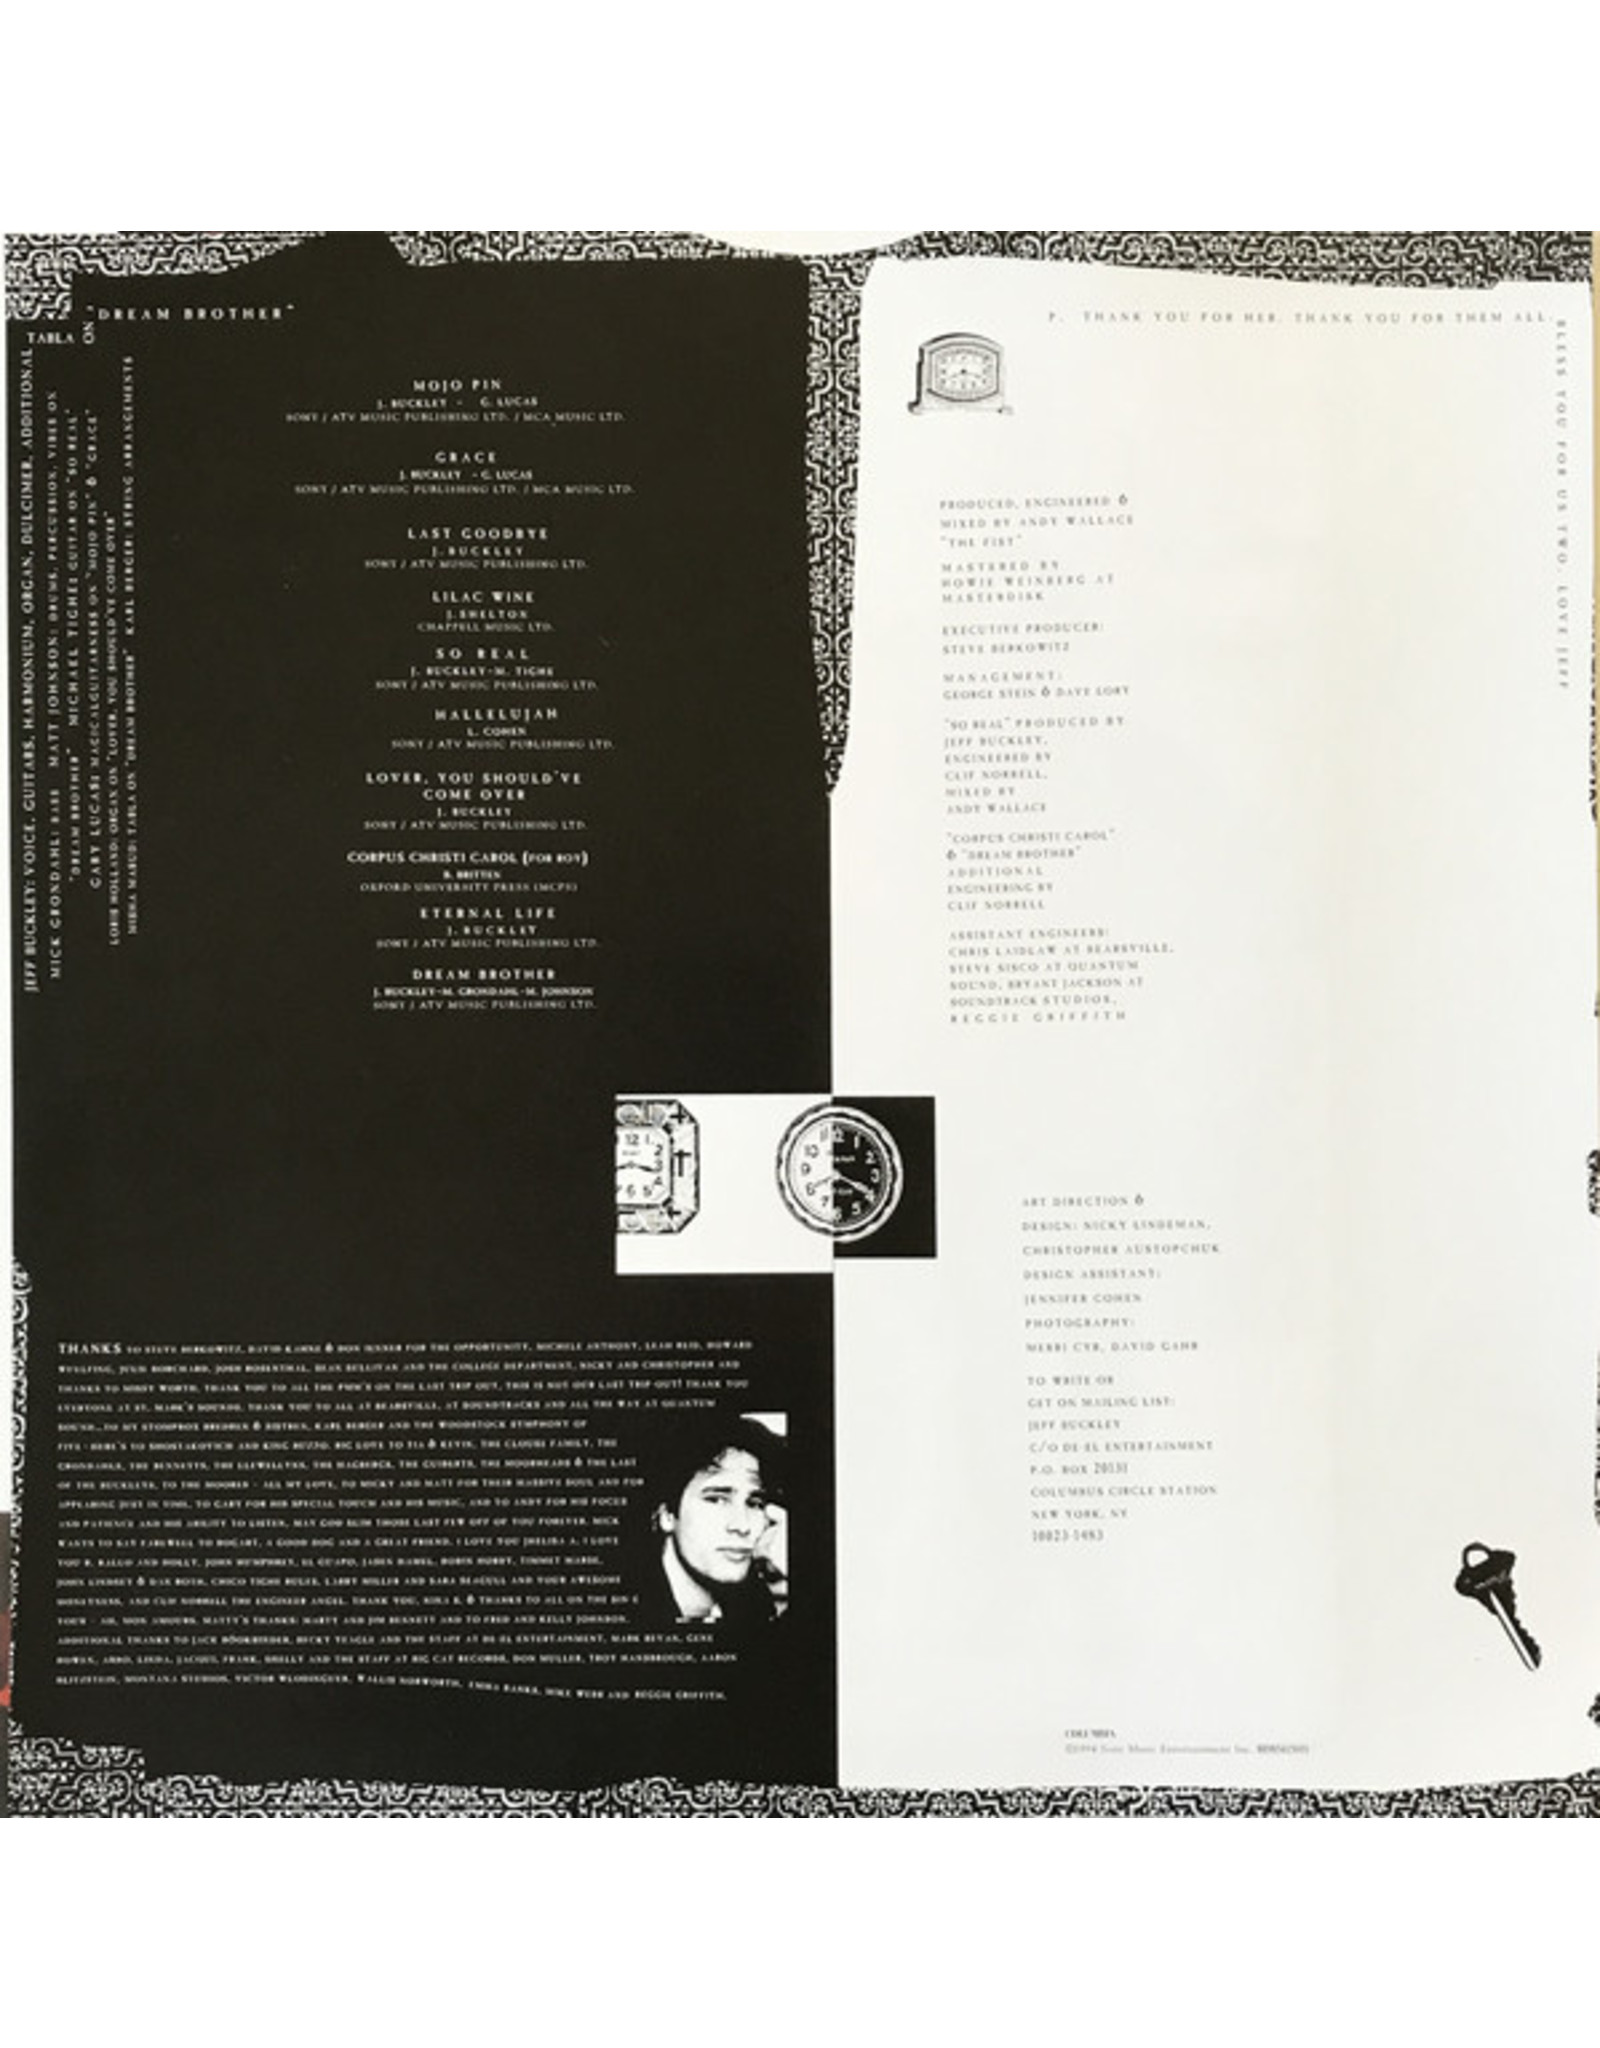 Jeff Buckley - Grace (25th Anniversary Gold Vinyl)